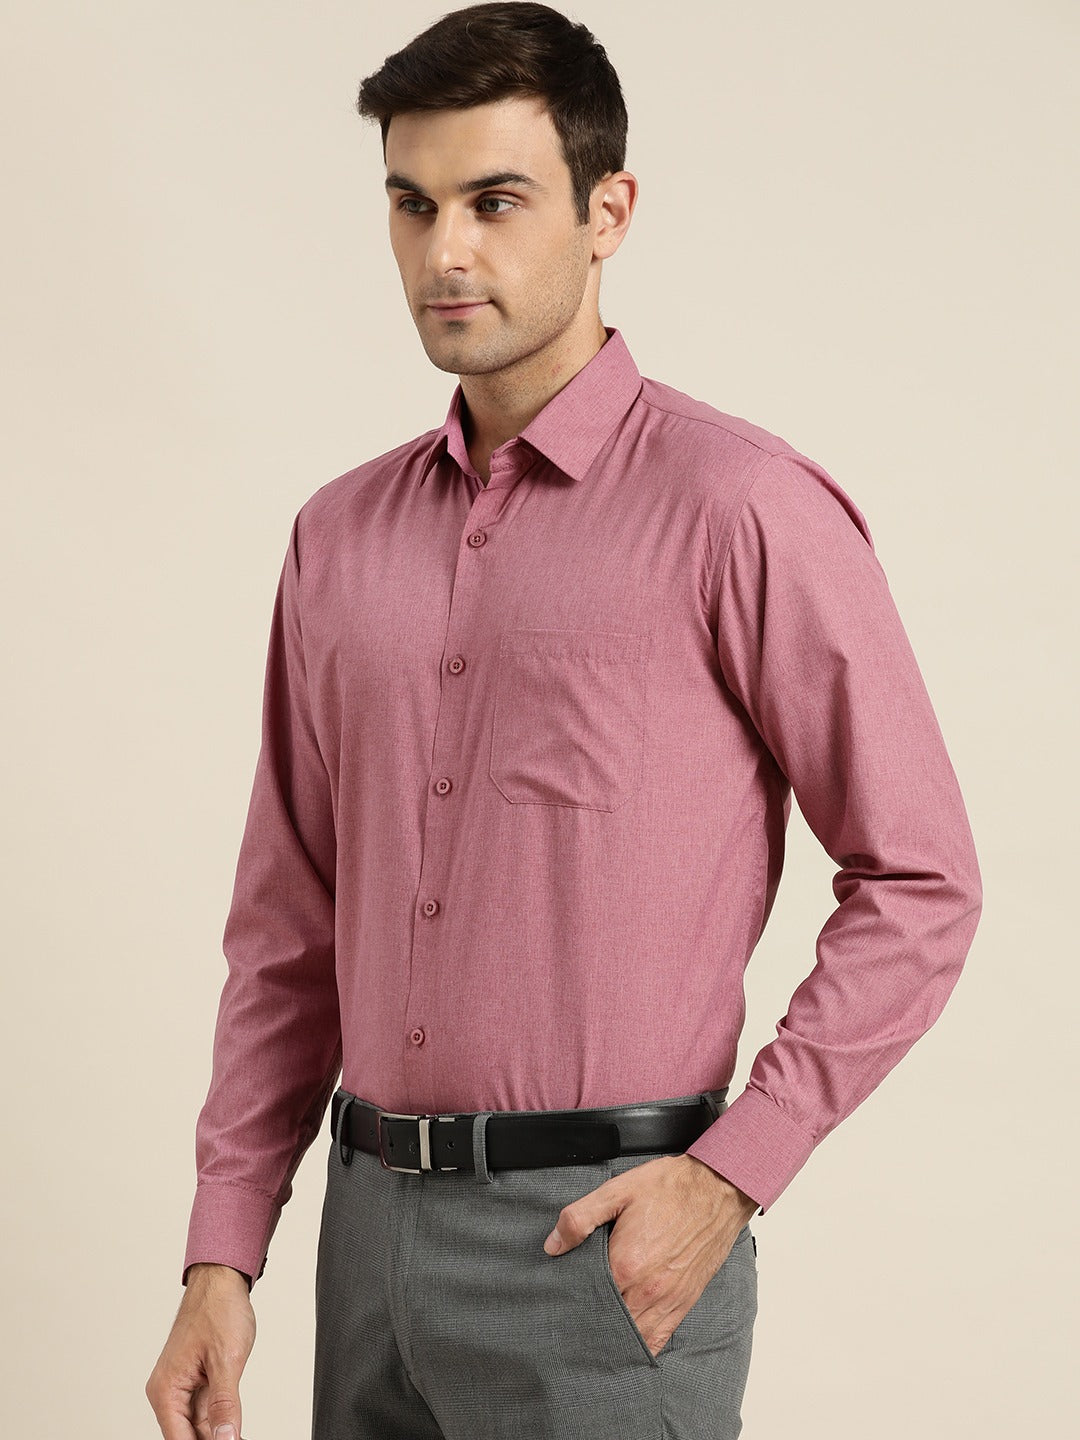 Men's Cotton Magenta Casual Shirt